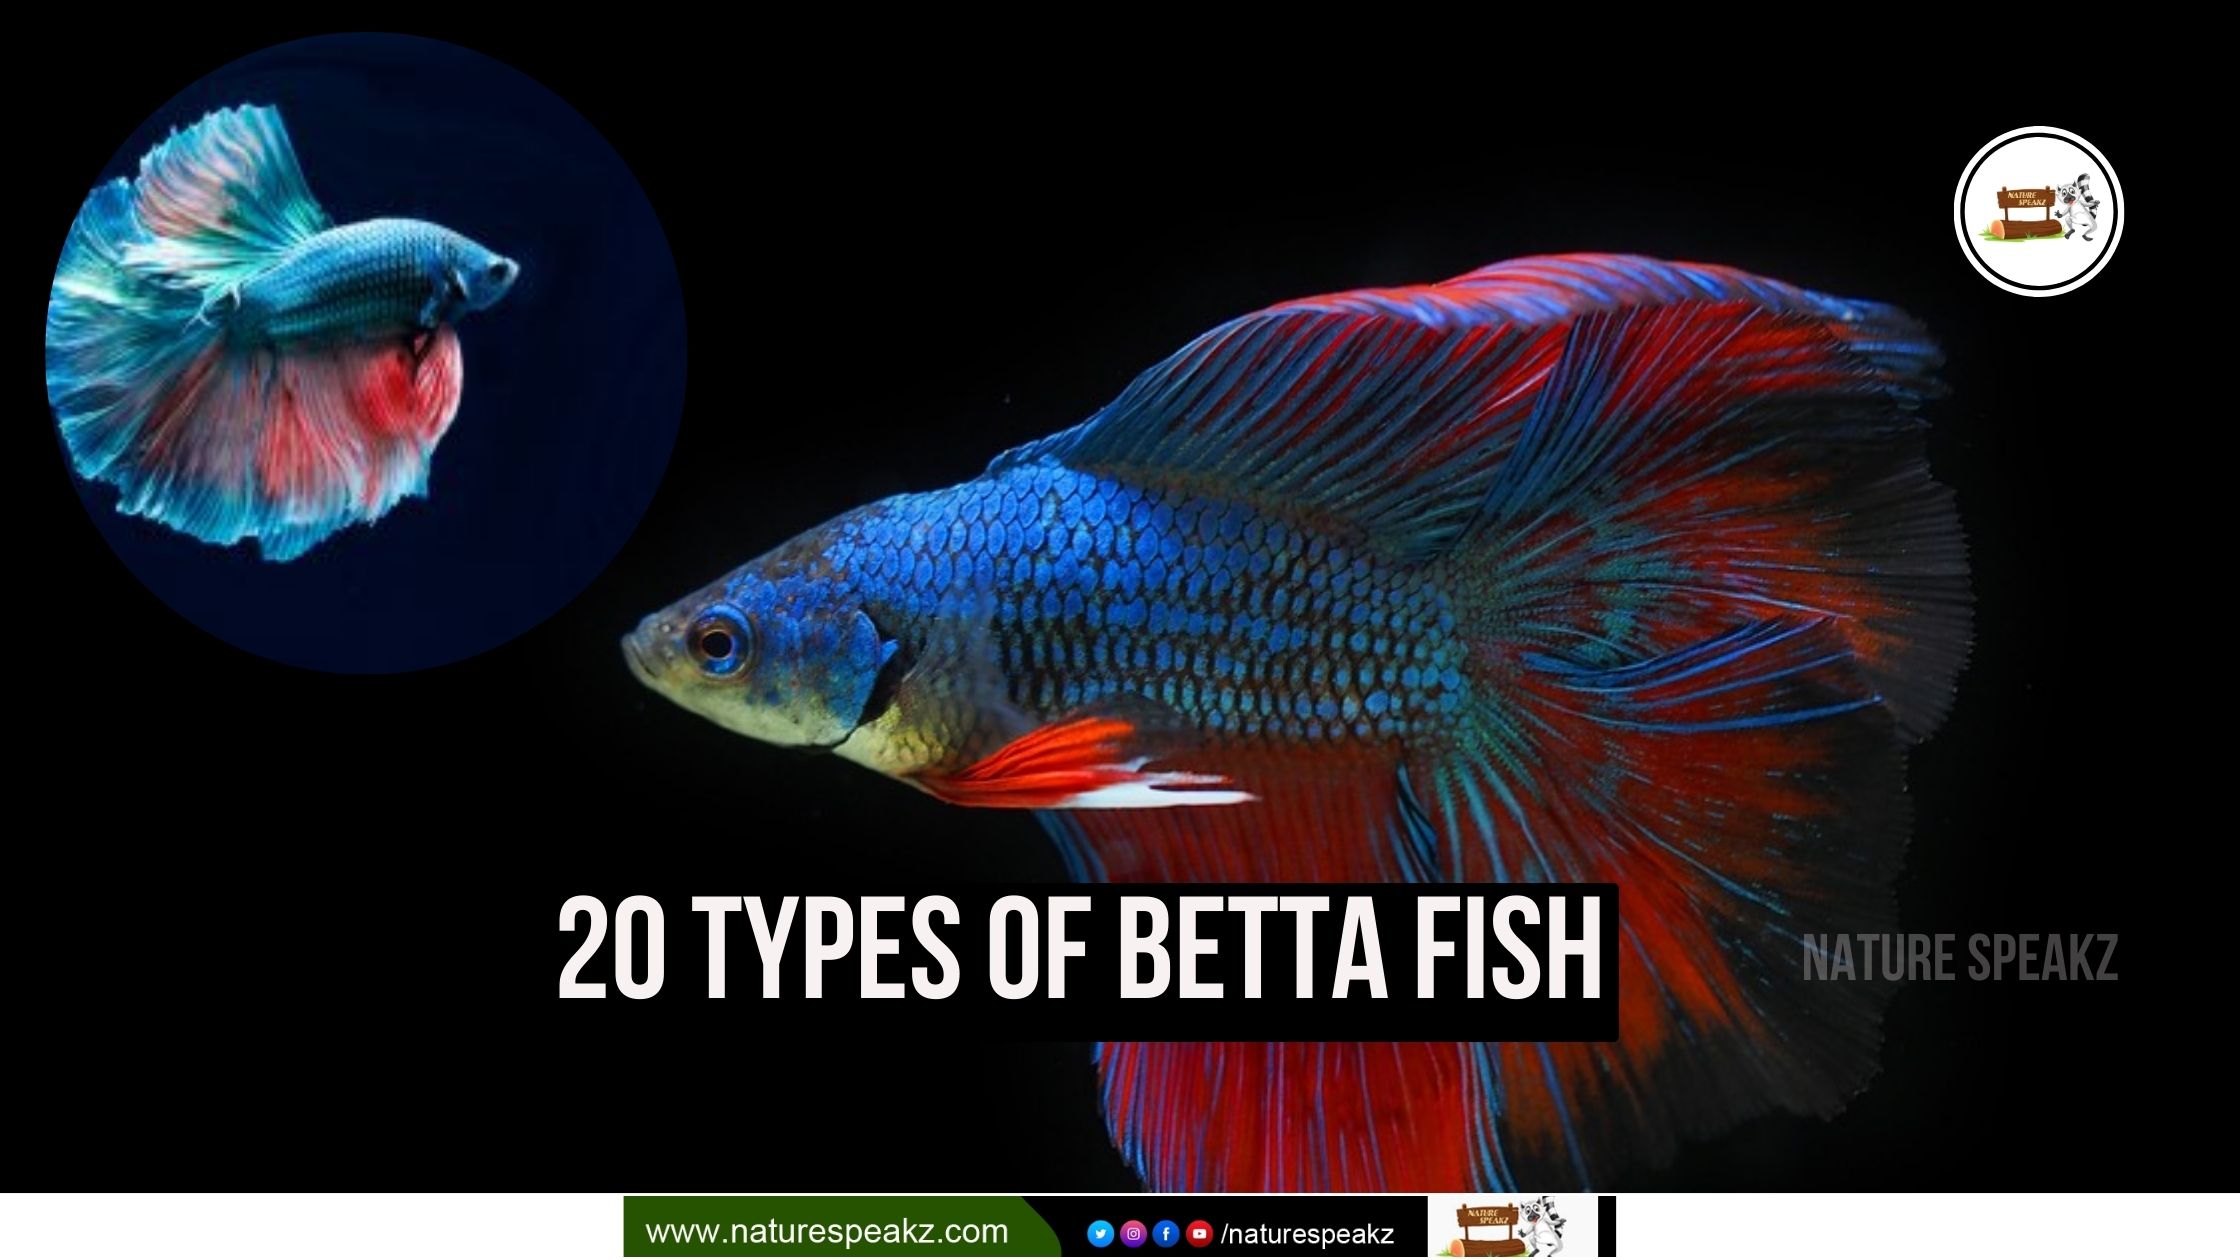 20 Types of Betta Fish